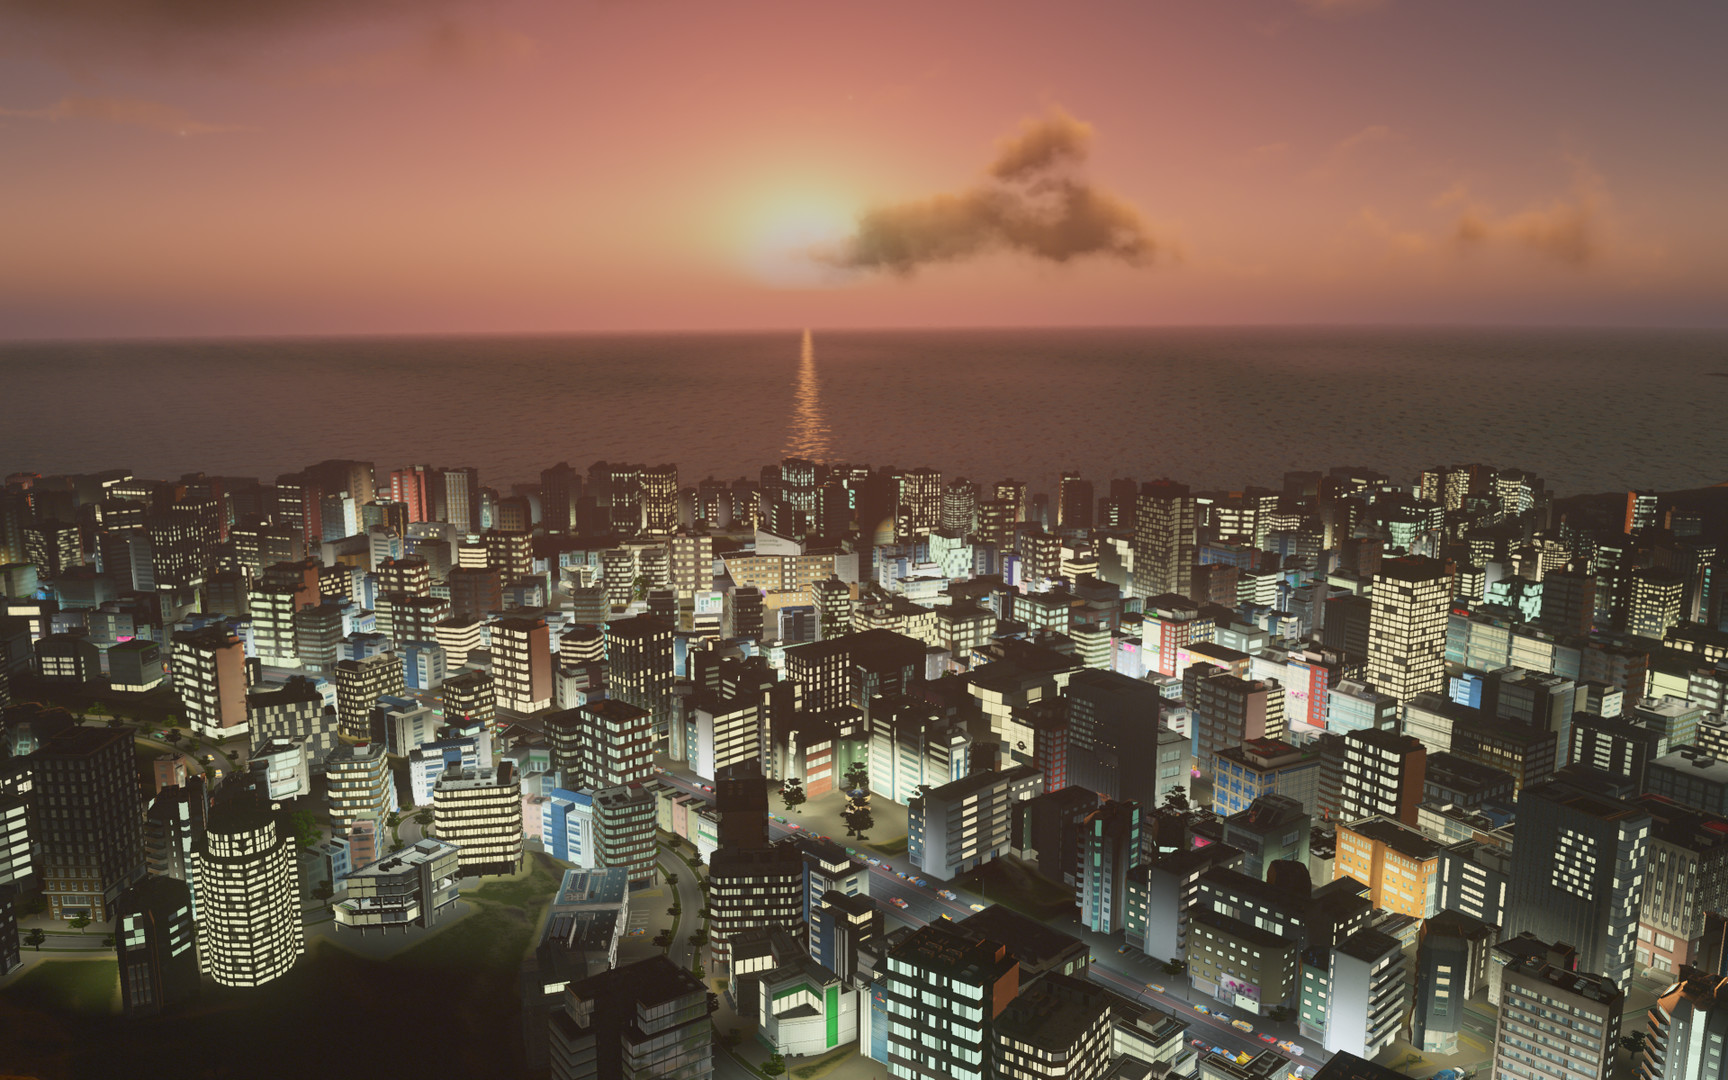 [$ 0.51] Cities: Skylines - Sunny Breeze Radio DLC Steam CD Key